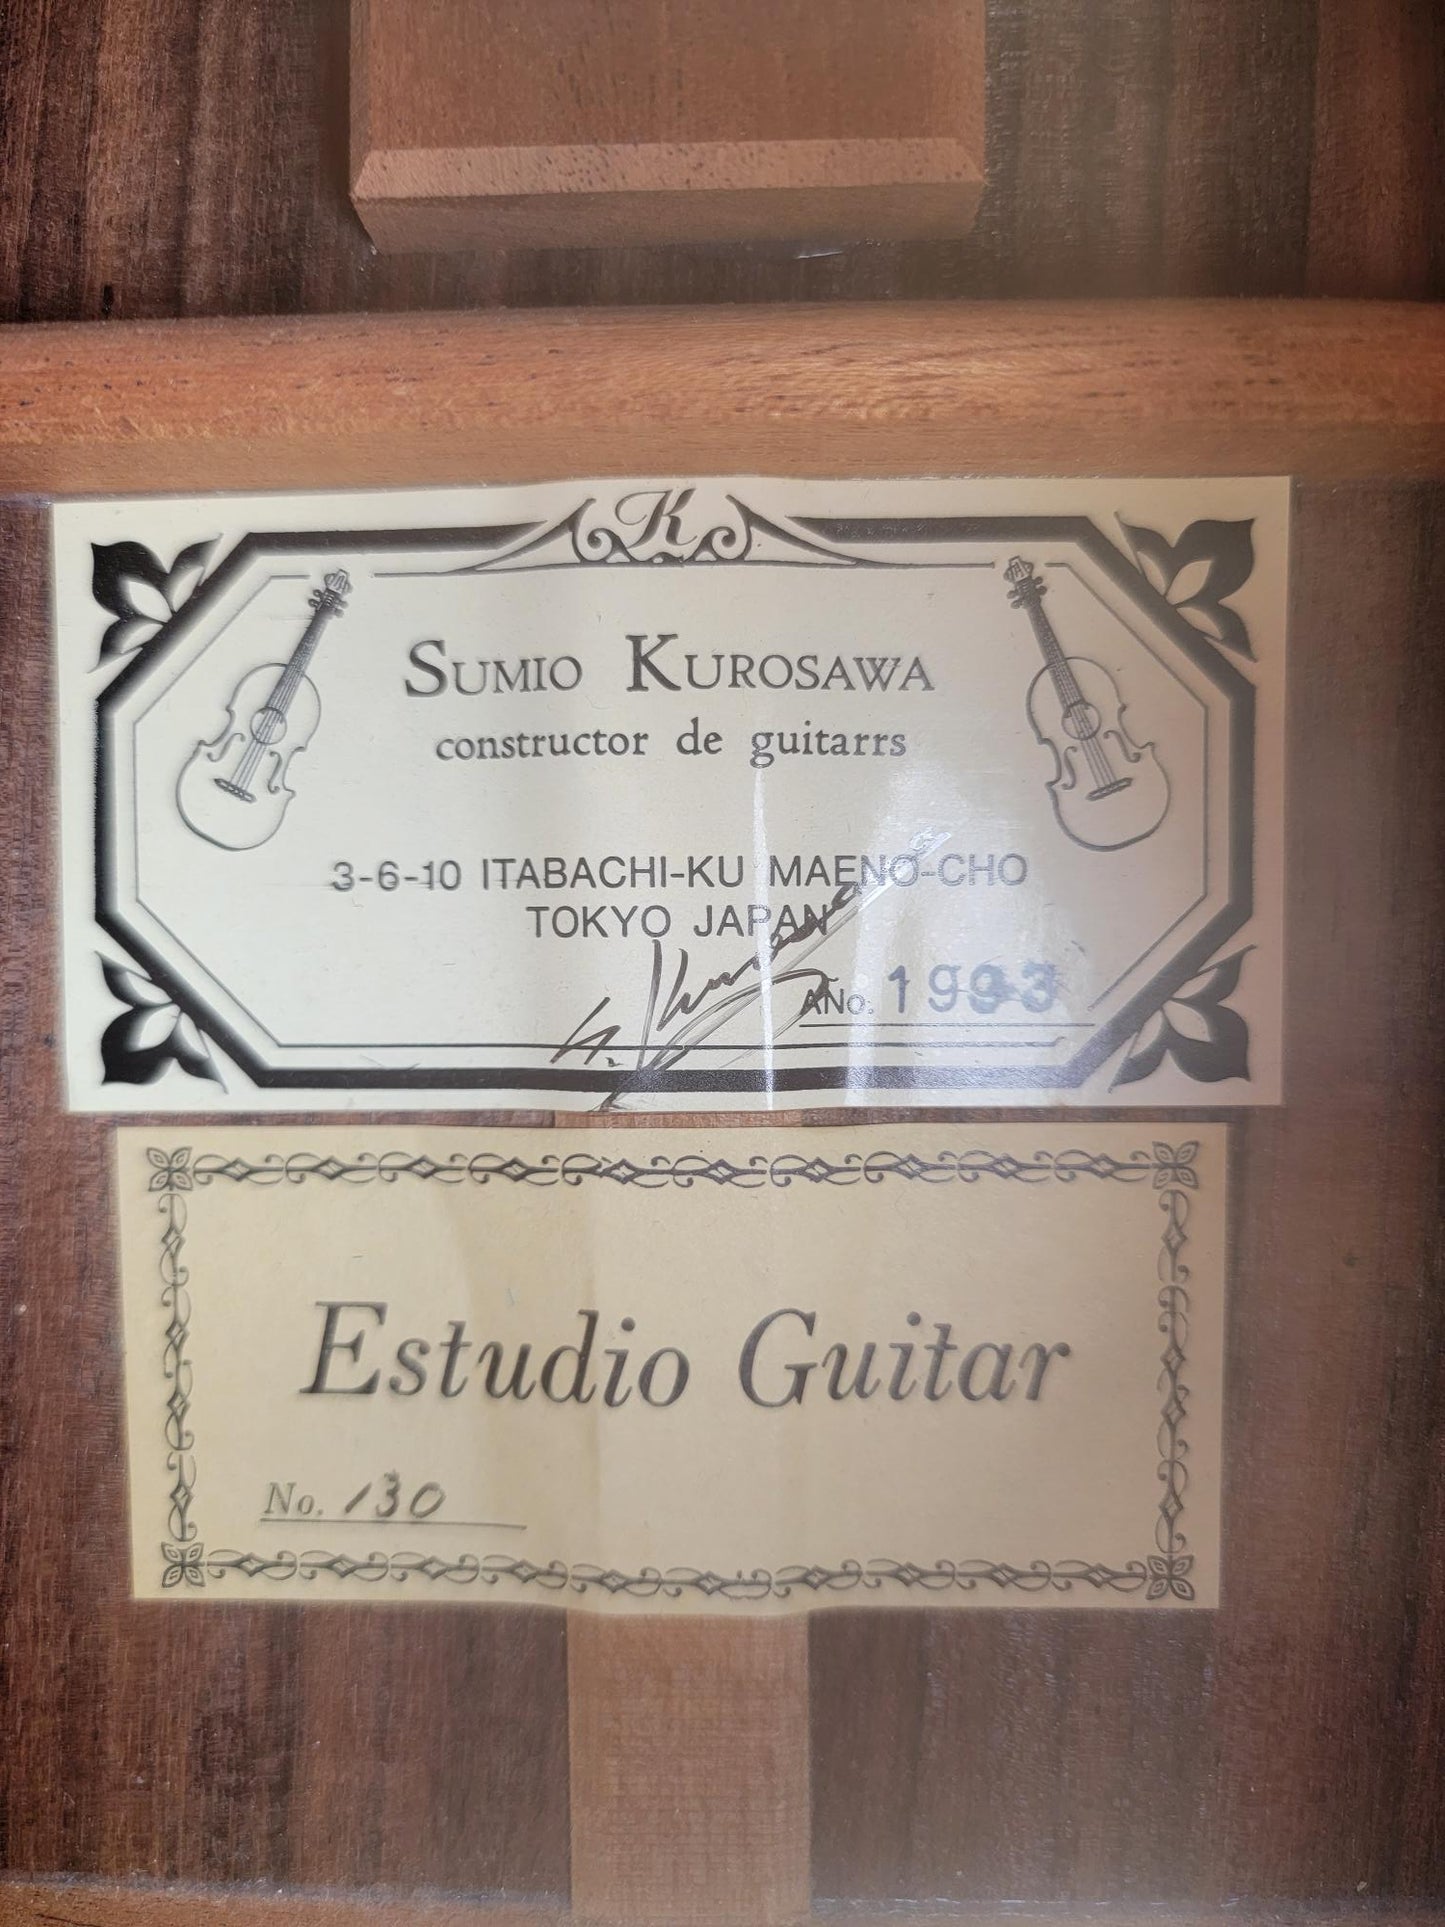 Sumio Kurosawa Model 130 Estudio Classical Guitar